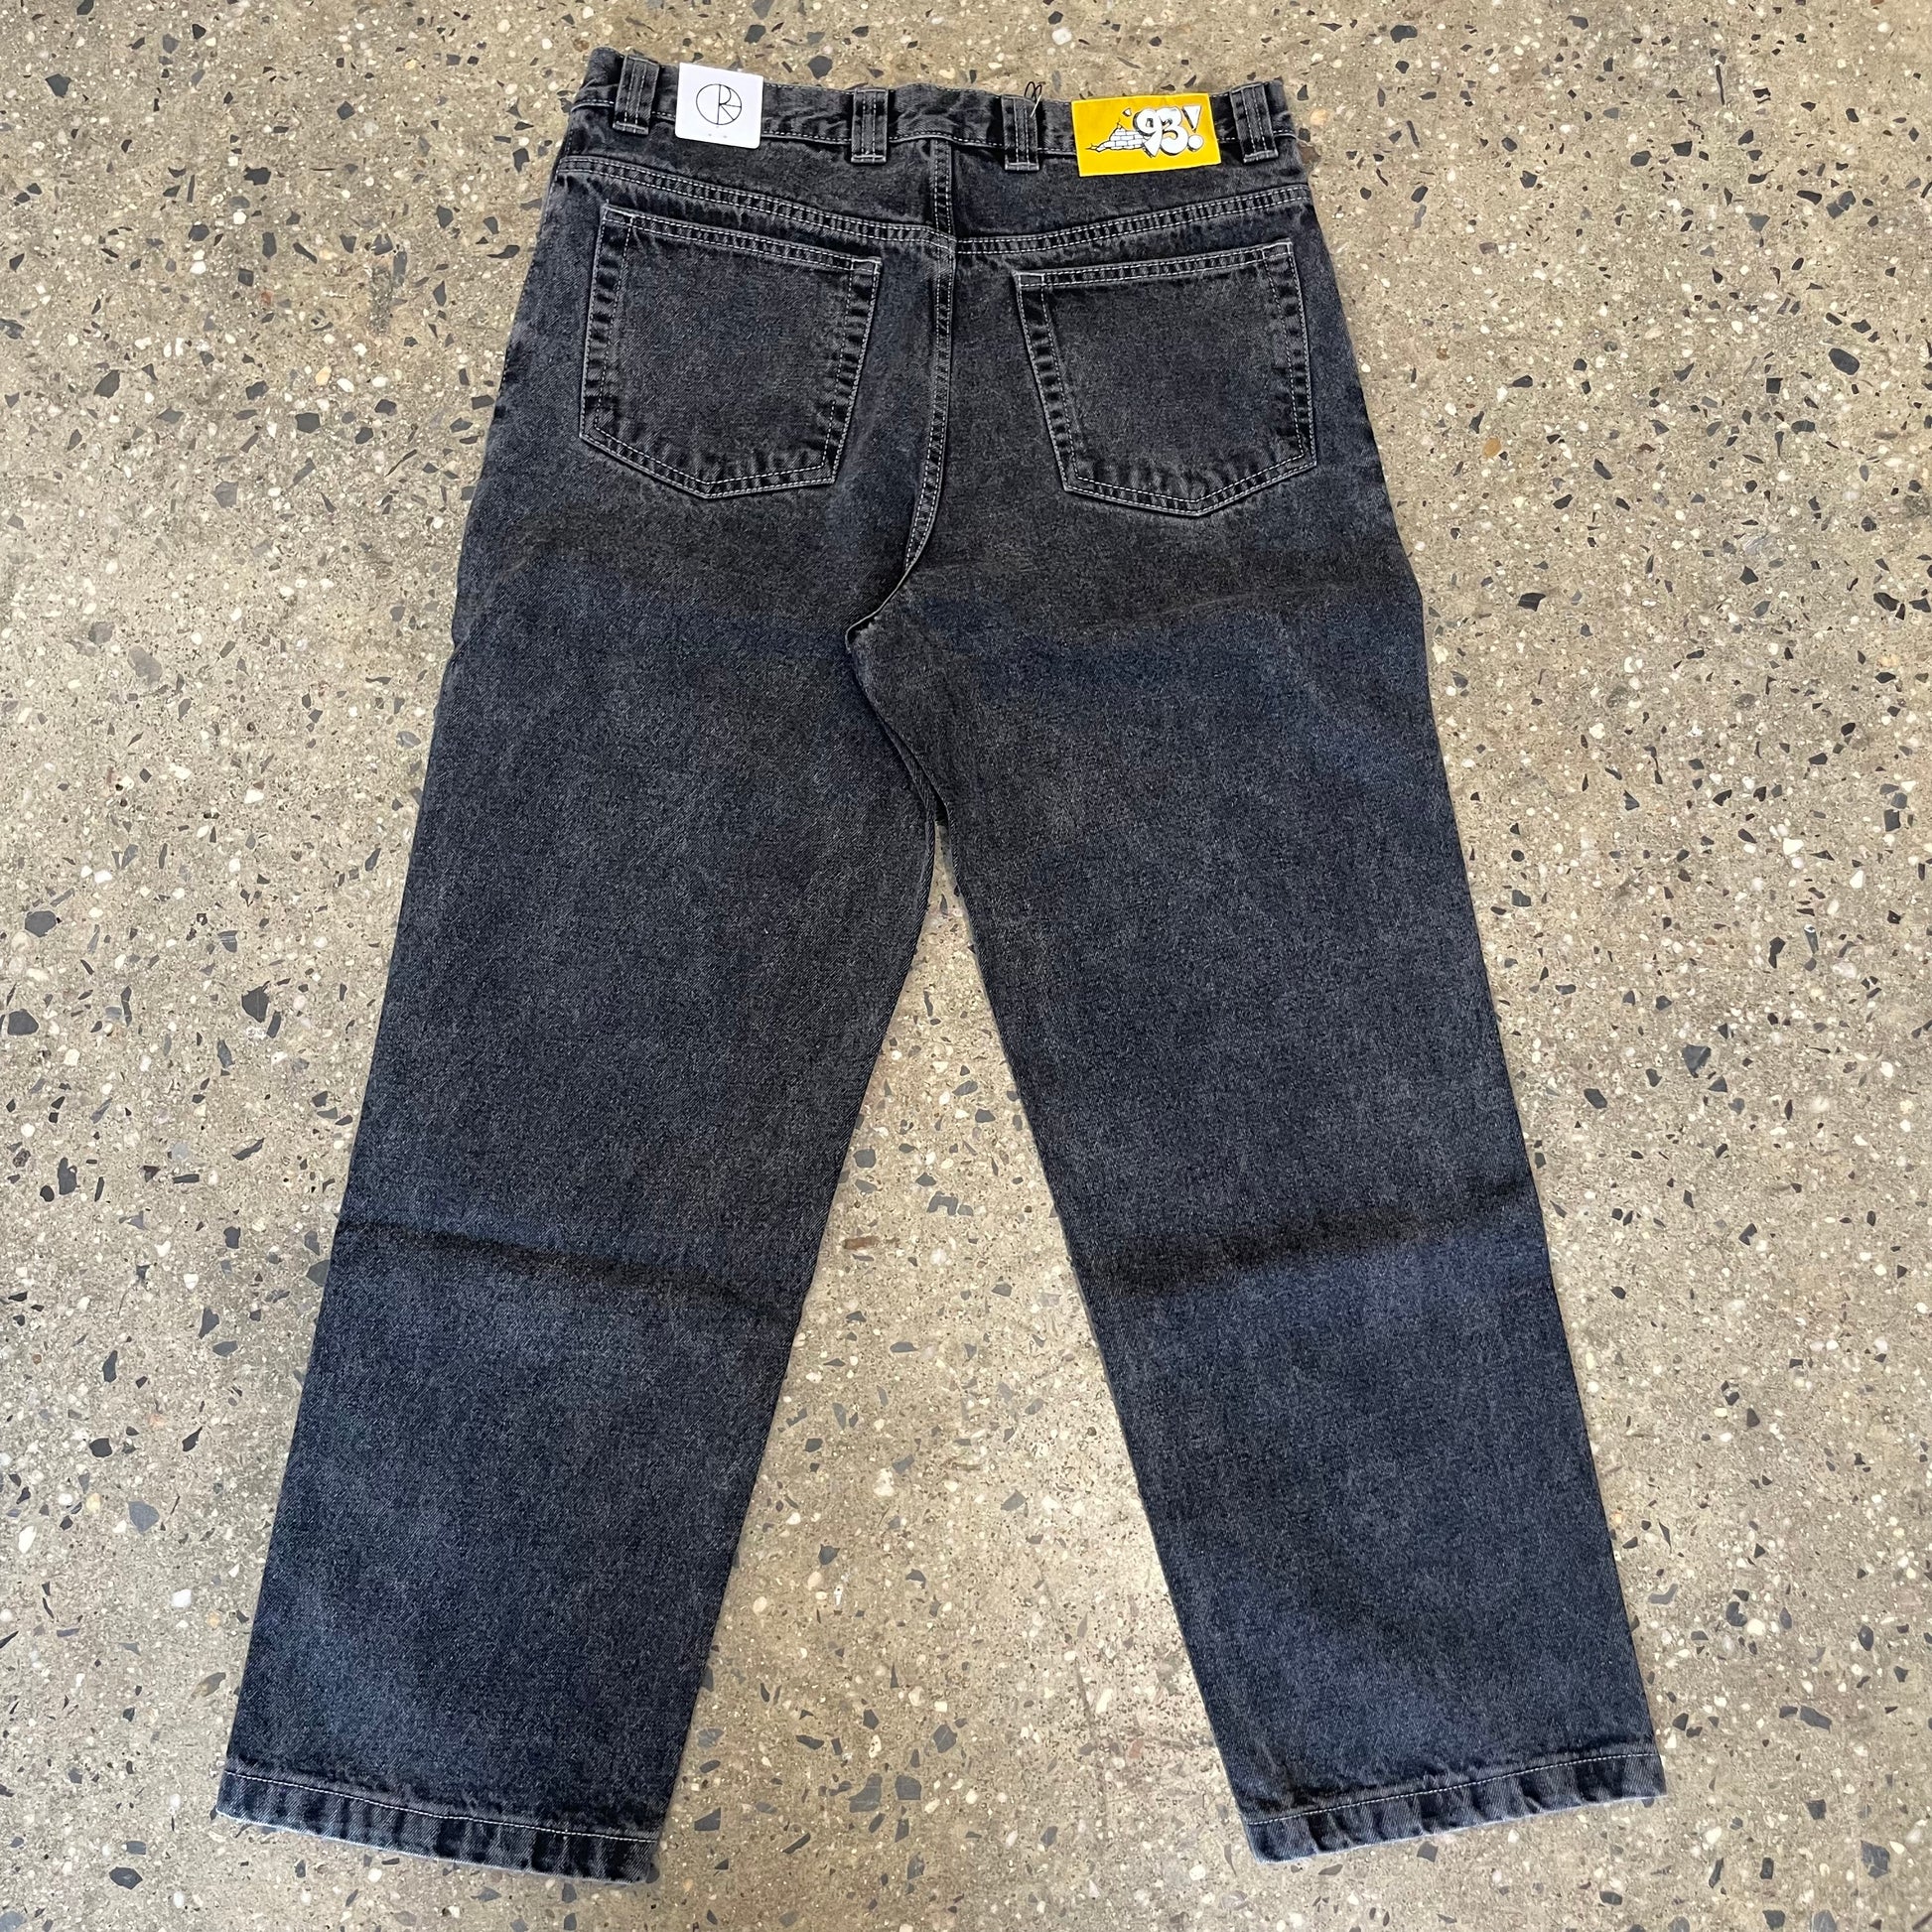 back view of silver black denim jeans